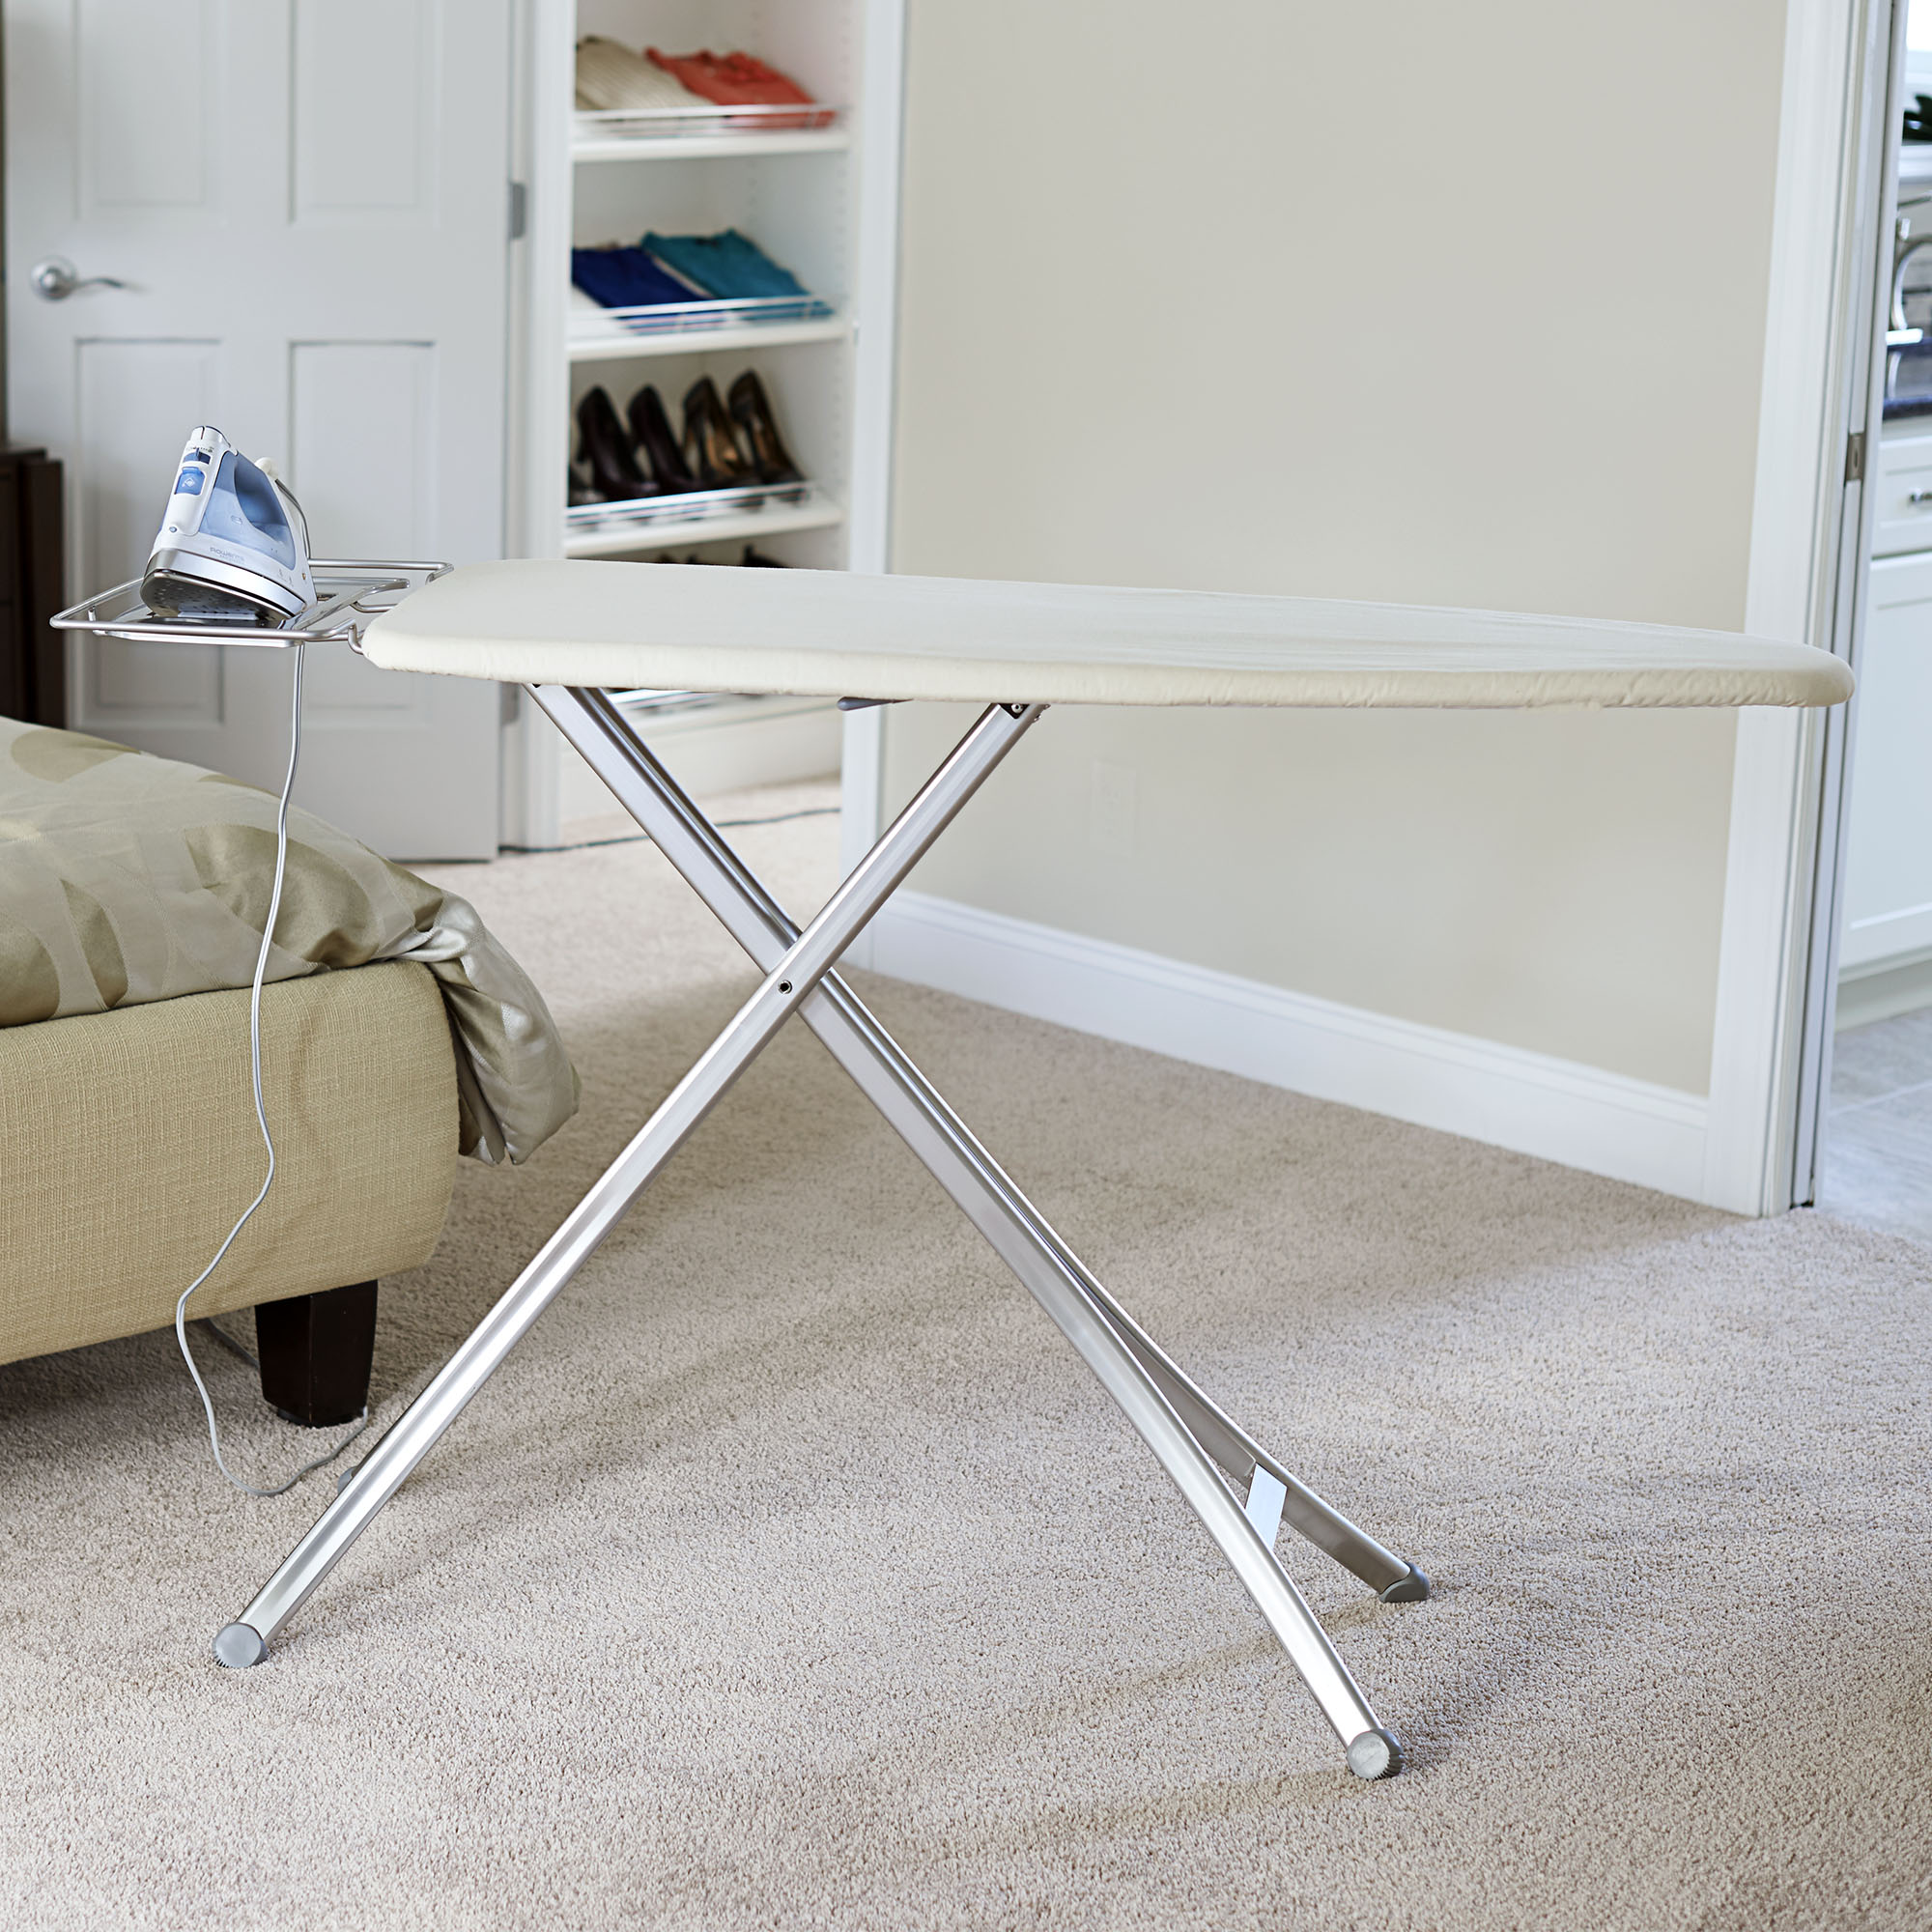 Household Essentials Lightweight Wide Top Ironing Board, Aluminum leg - image 1 of 4